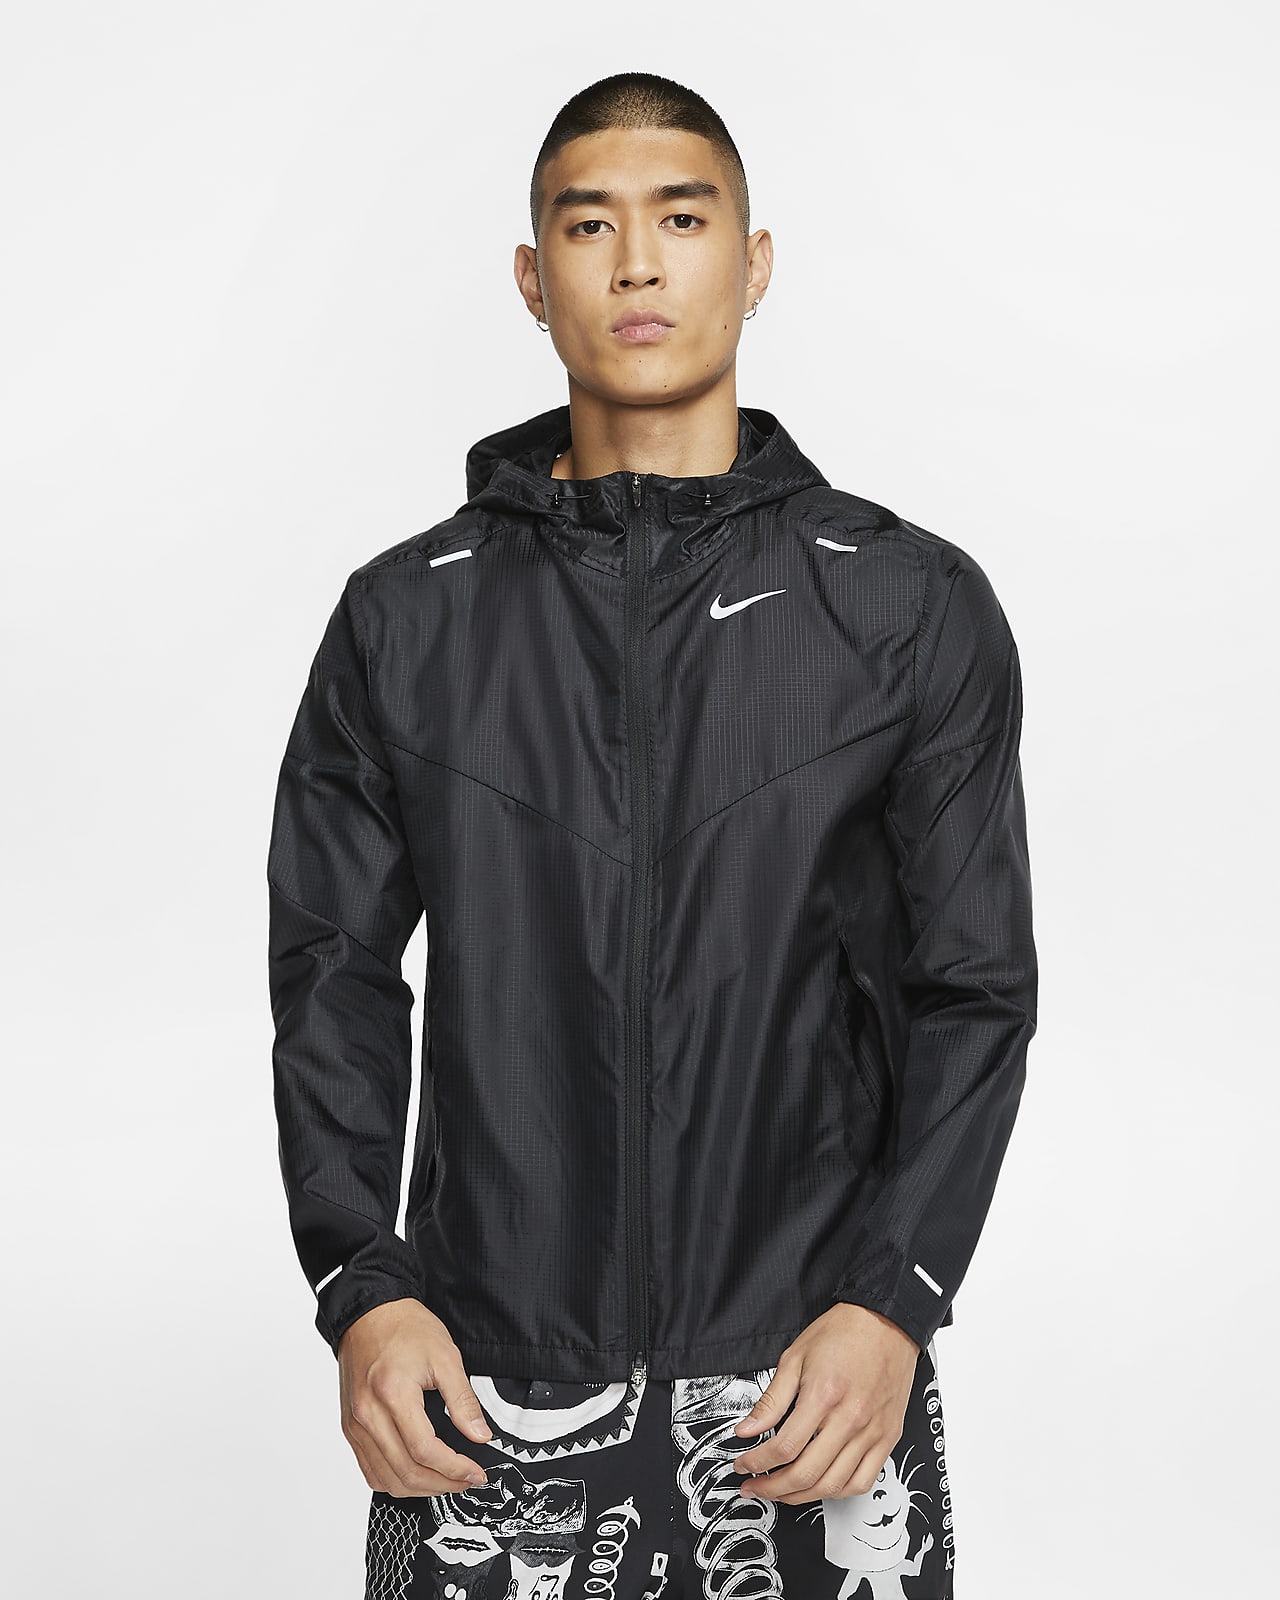 Koel Verkeersopstopping Slaapkamer Nike Windrunner Mens' Running Jacket. Nike.com